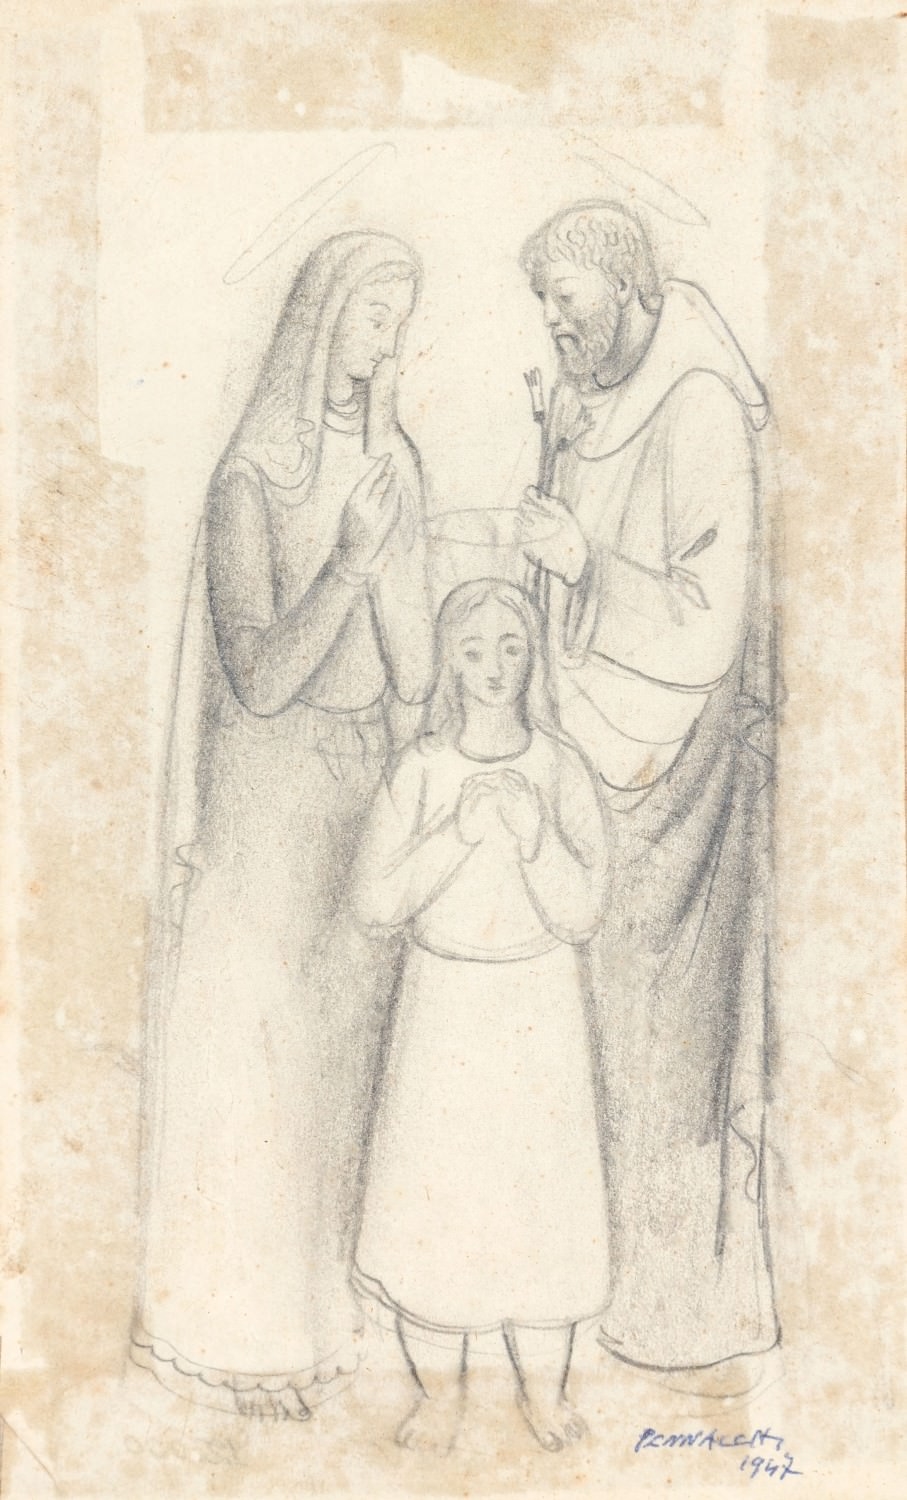 Sacra Famiglia by Fulvio Pennacchi, 1947